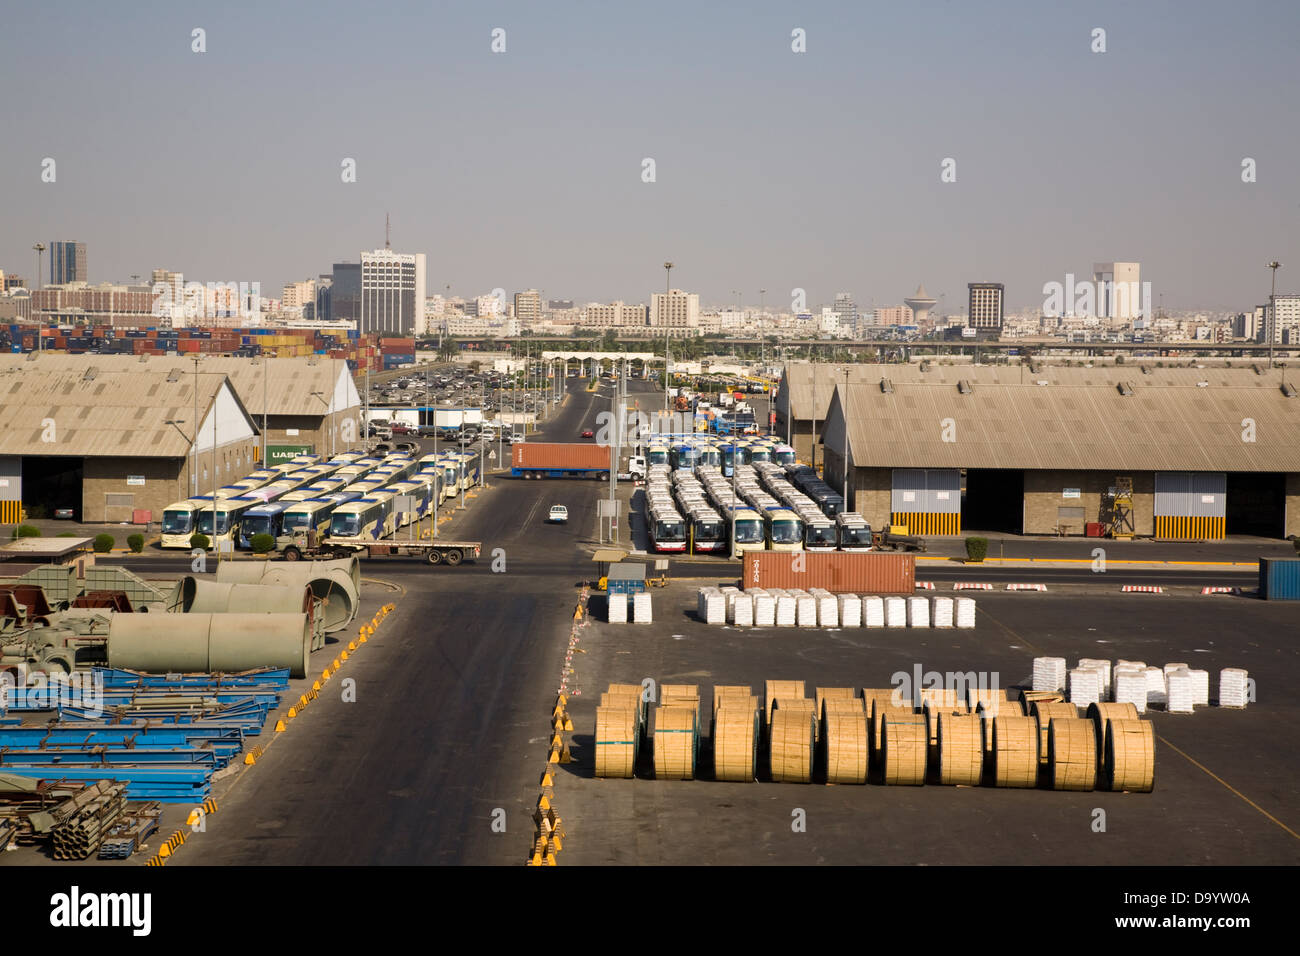 El puerto islámico de Jeddah, Arabia Saudita. Foto de stock